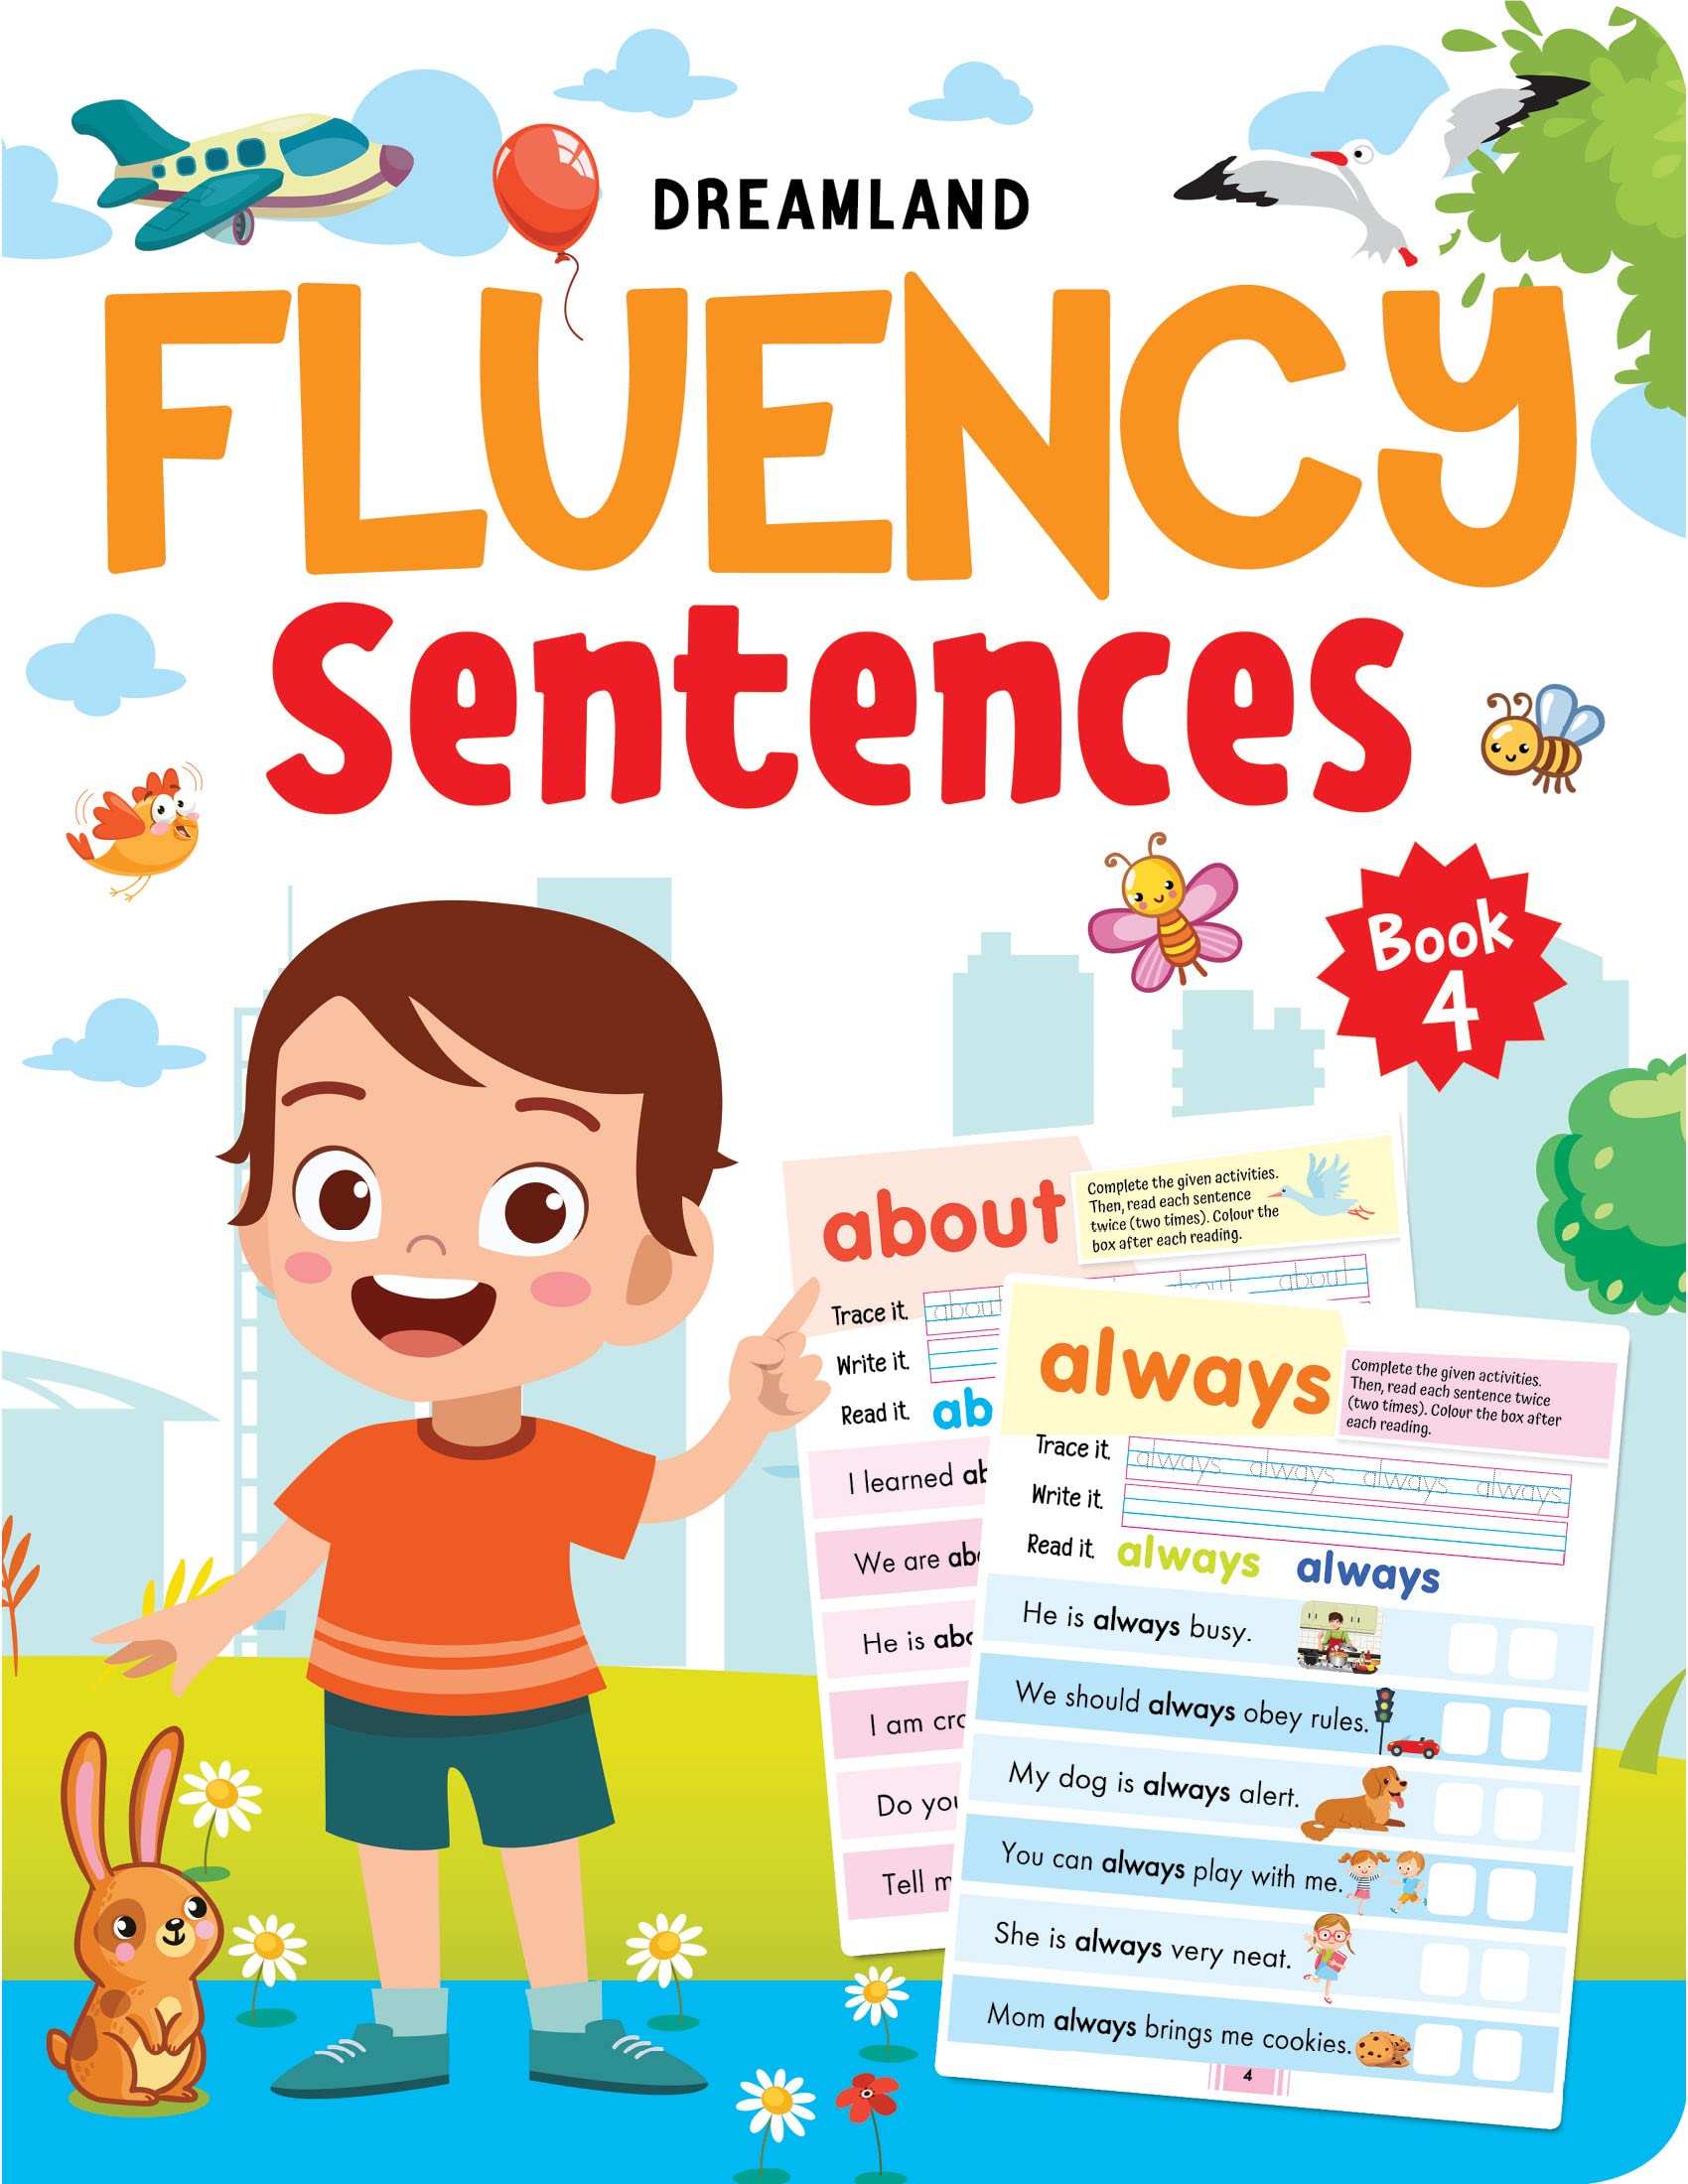 Fluency Sentences Book 4 for Children Age 4 -8 Years